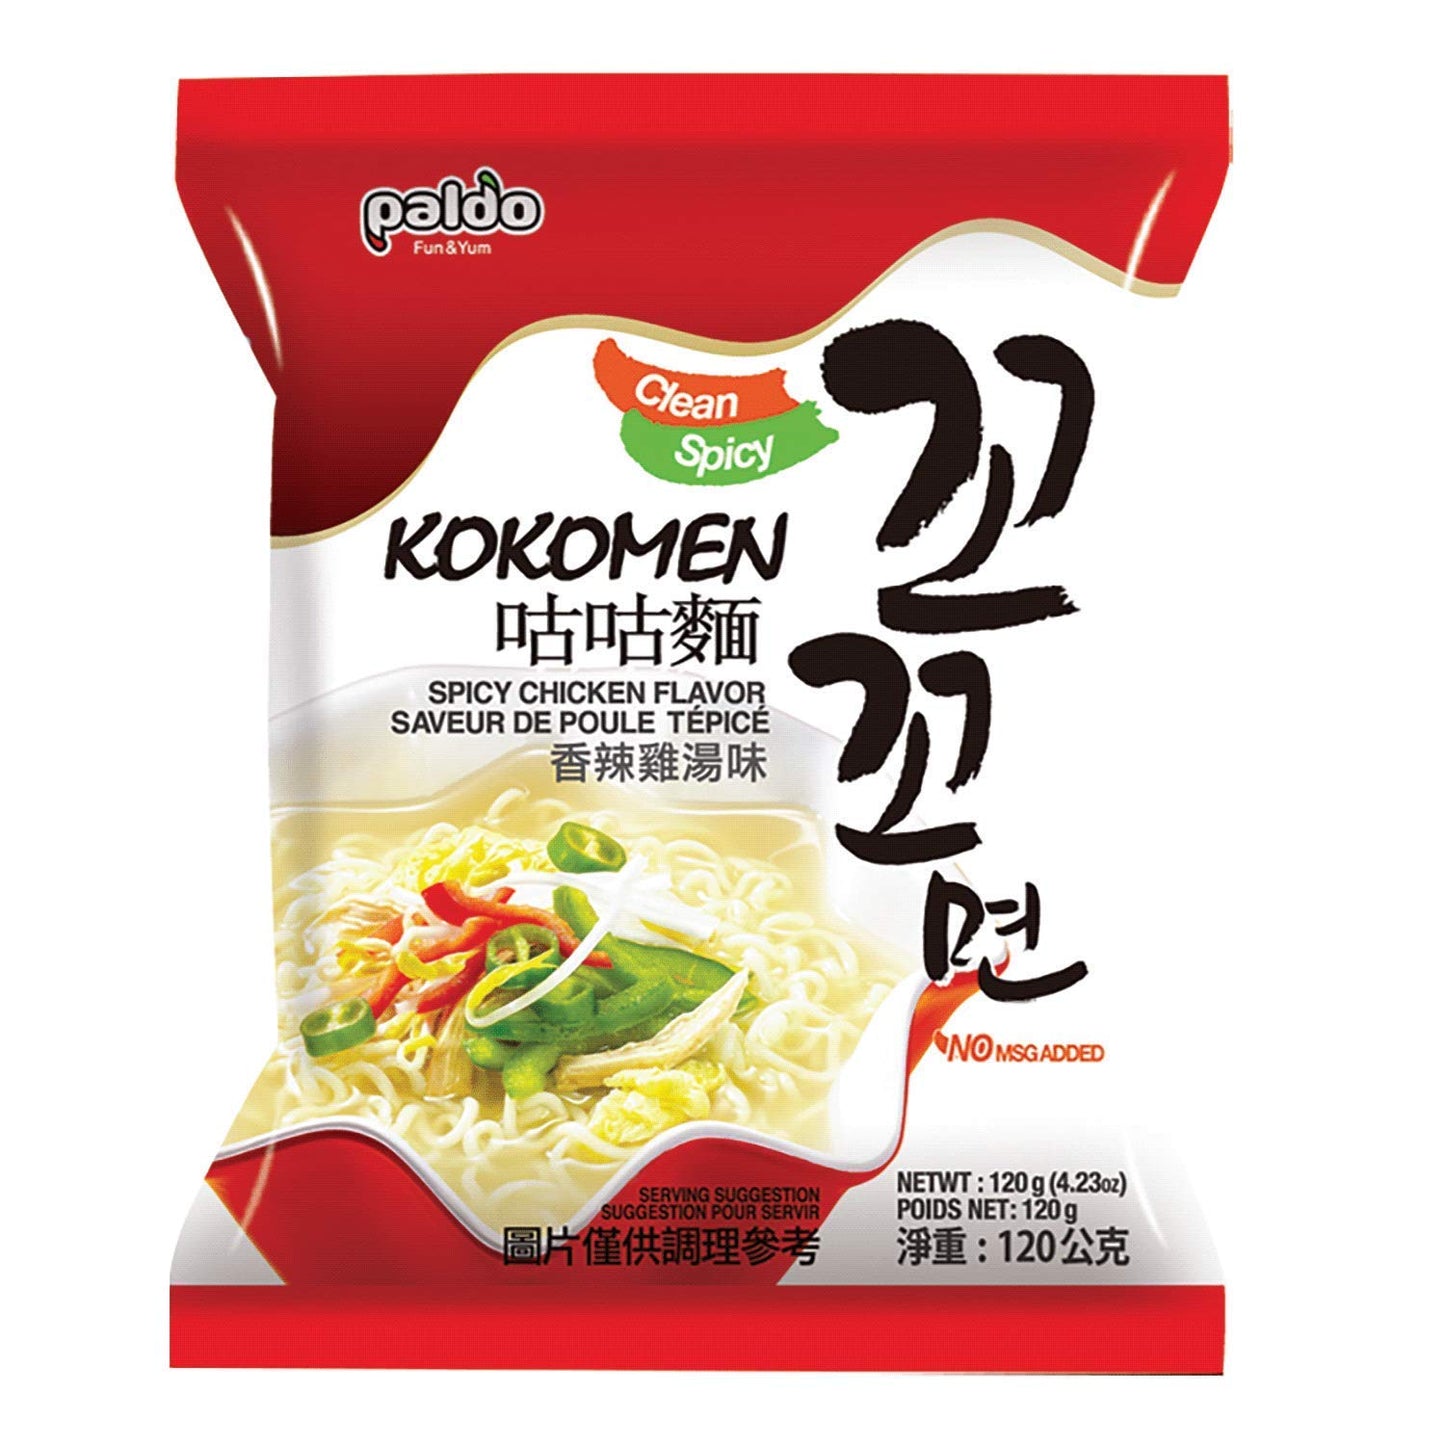 Kko Kko Myeon (10pcs Chicken Noodle)